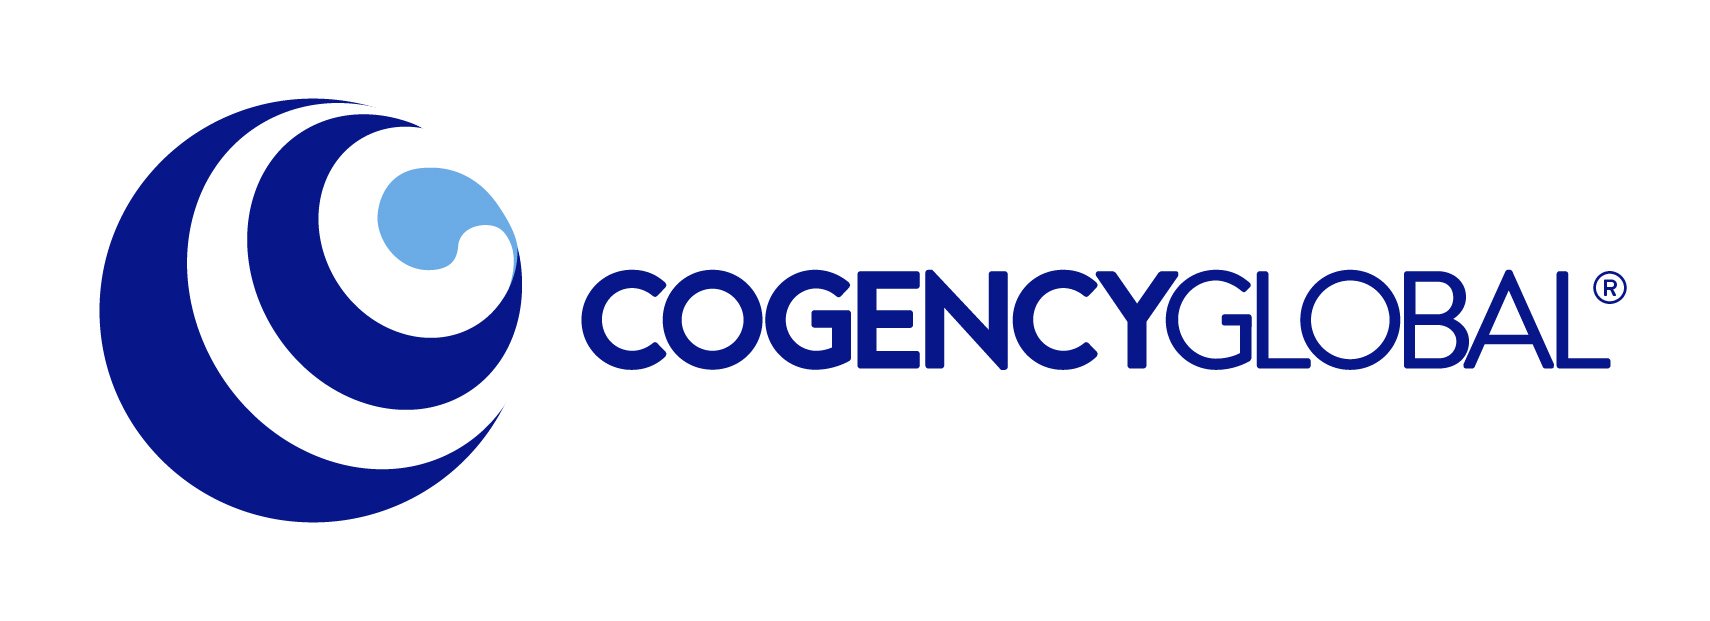 CogencyGlobal_Logo1_Horizontal-2